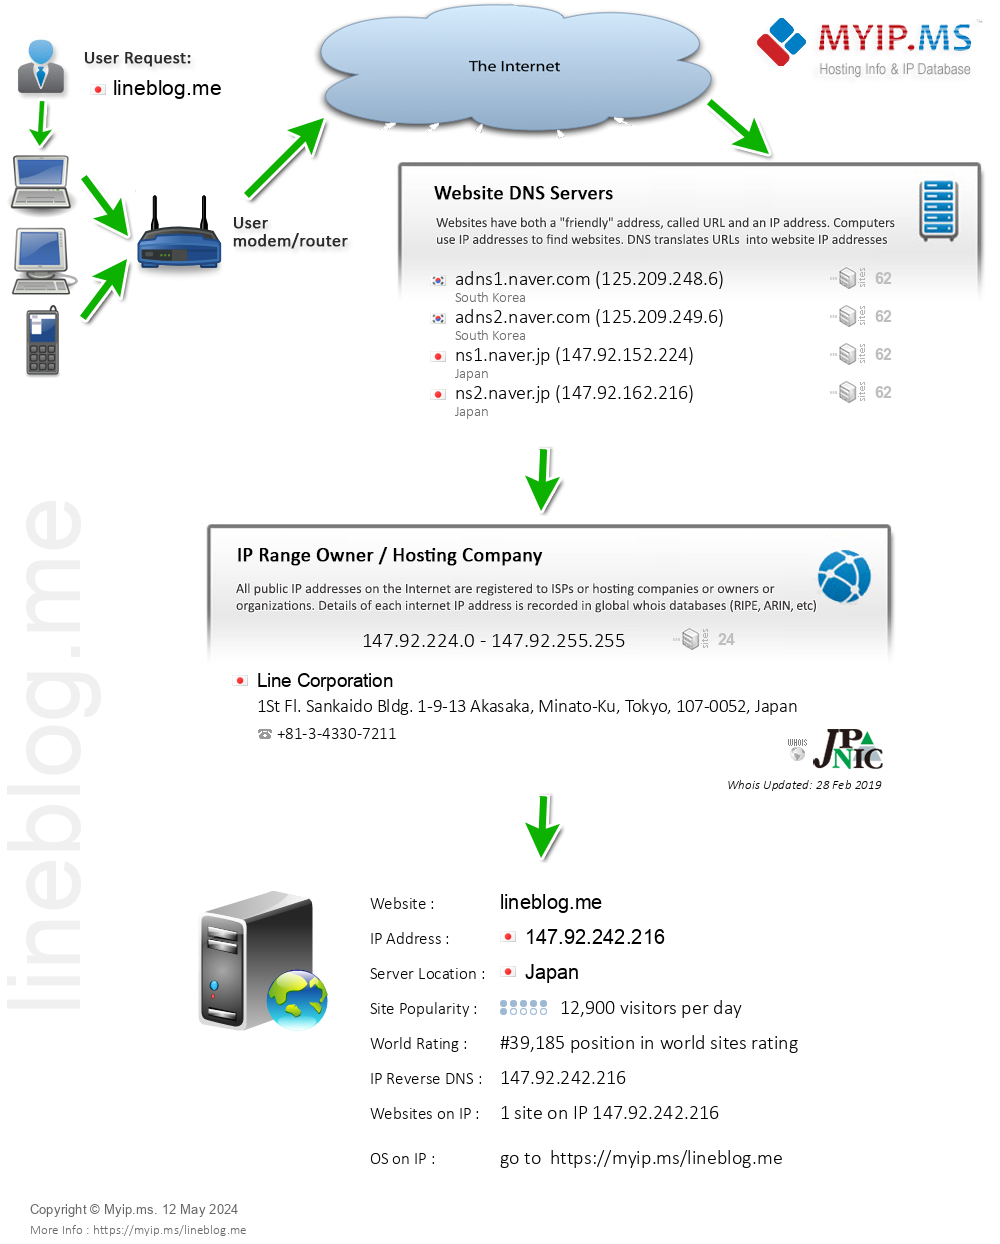 Lineblog.me - Website Hosting Visual IP Diagram